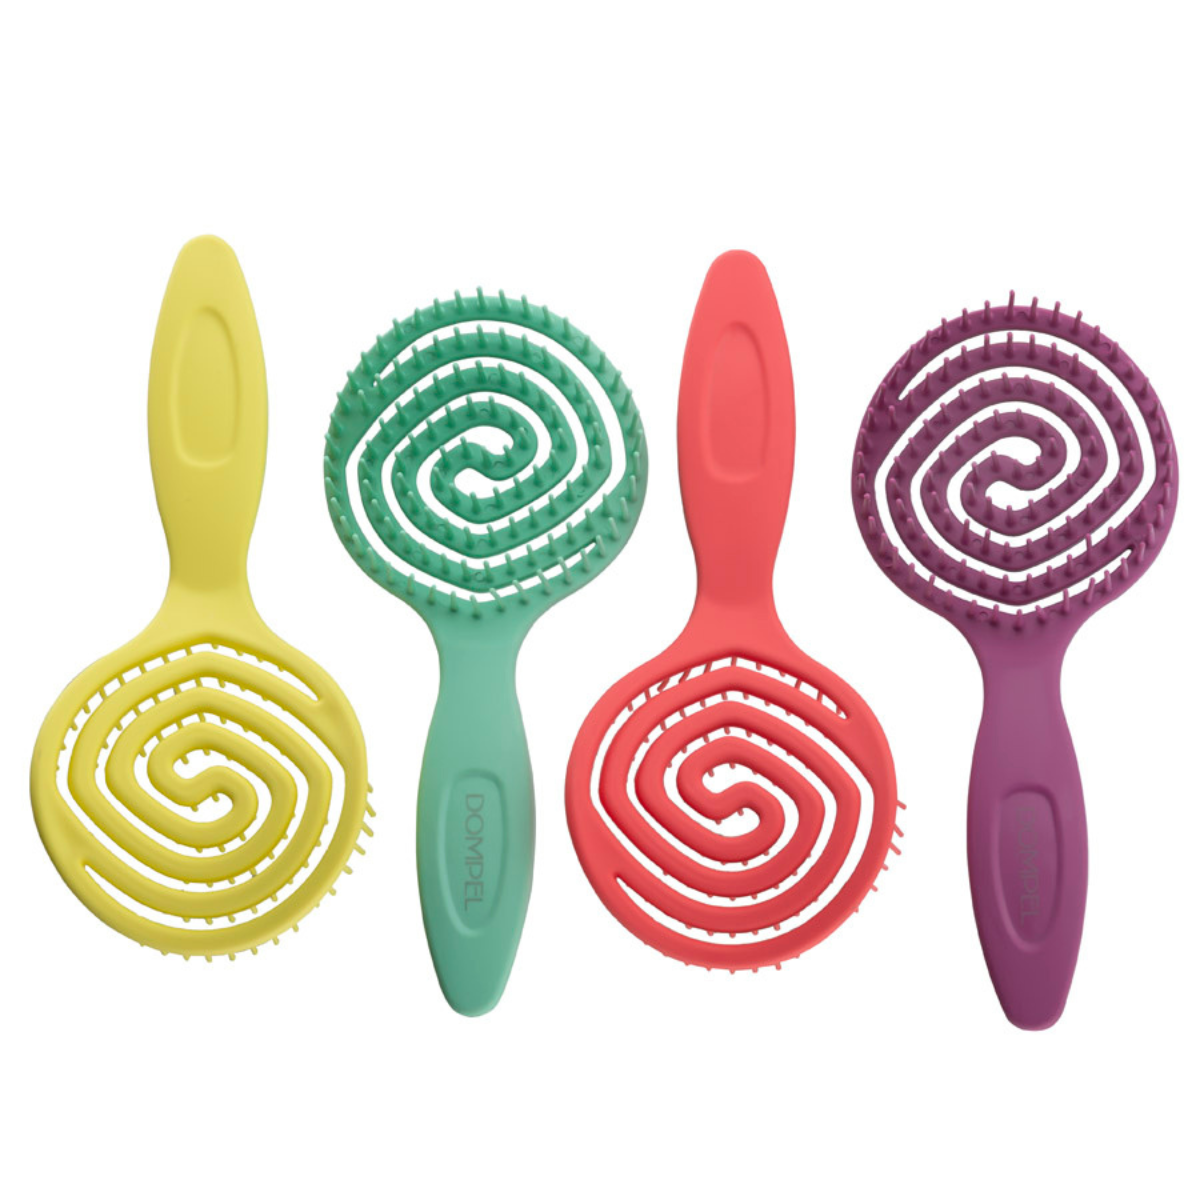 Dompel Hair Brush Pirulito, antistatic brush, 4 Pcs (Strawberry, Pineapple, Grape, Green apple) Model 4018 - depilcompany